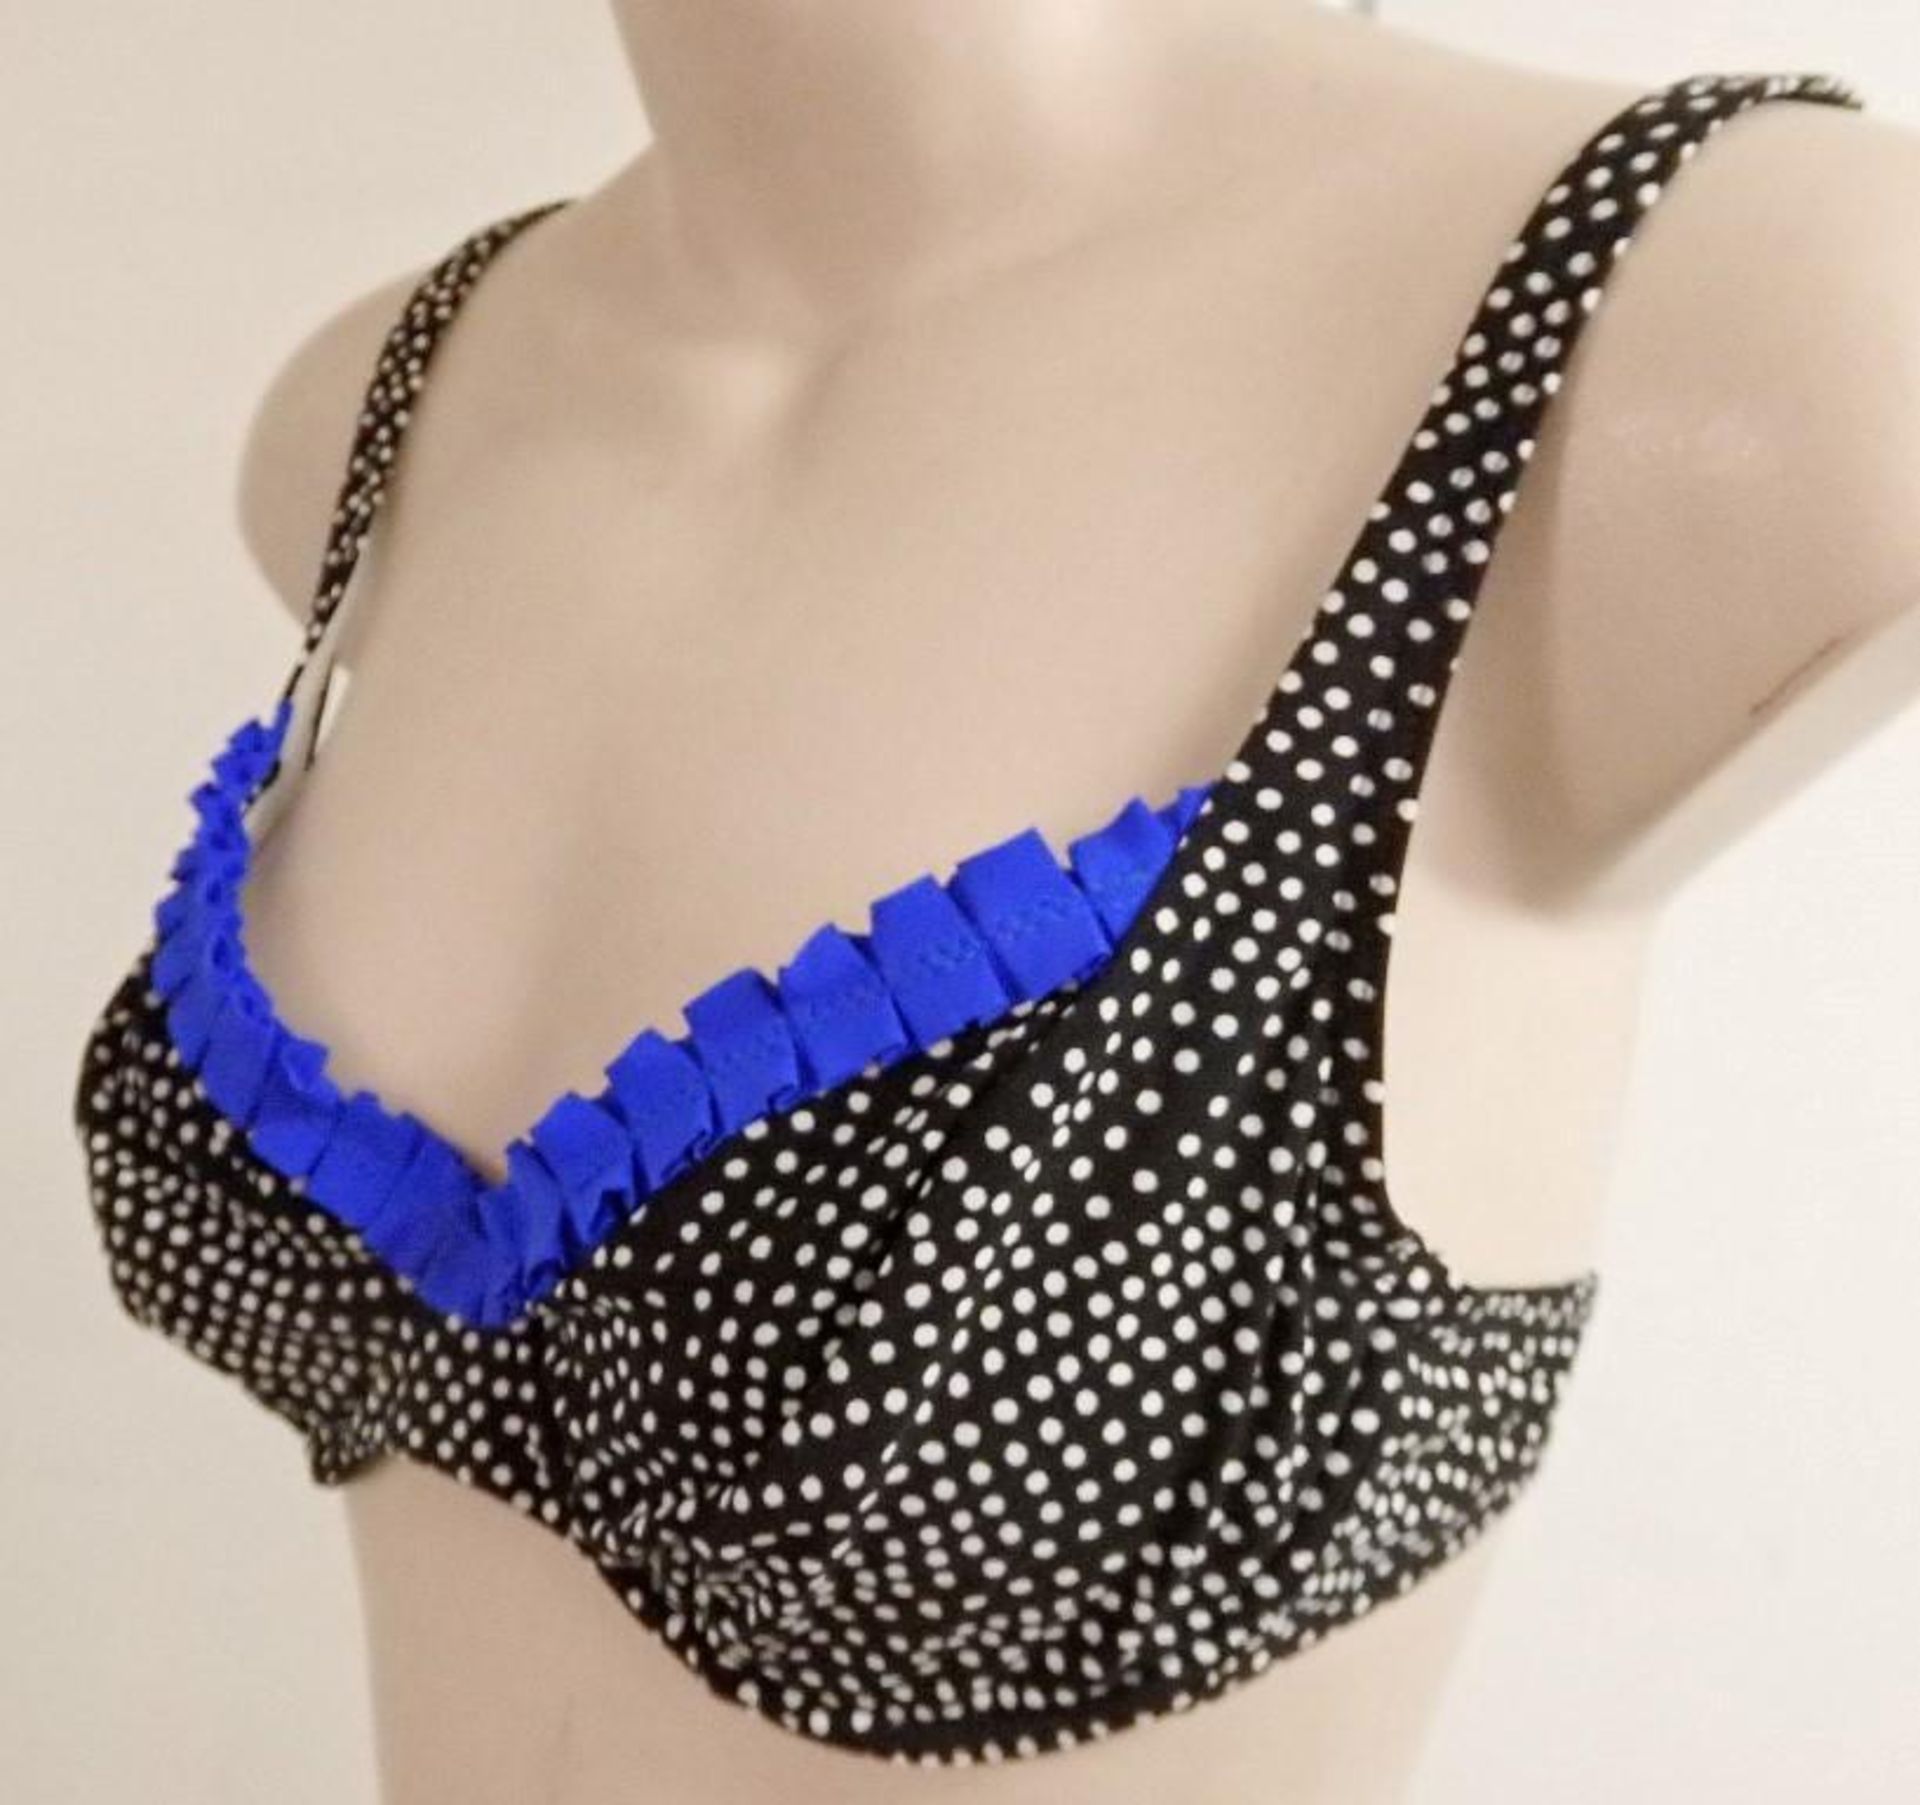 1 x Rasurel - Black Polka dot with royal blue trim &frill Tobago Bikini - B21068 - Size 2C - UK 32 - - Image 5 of 10